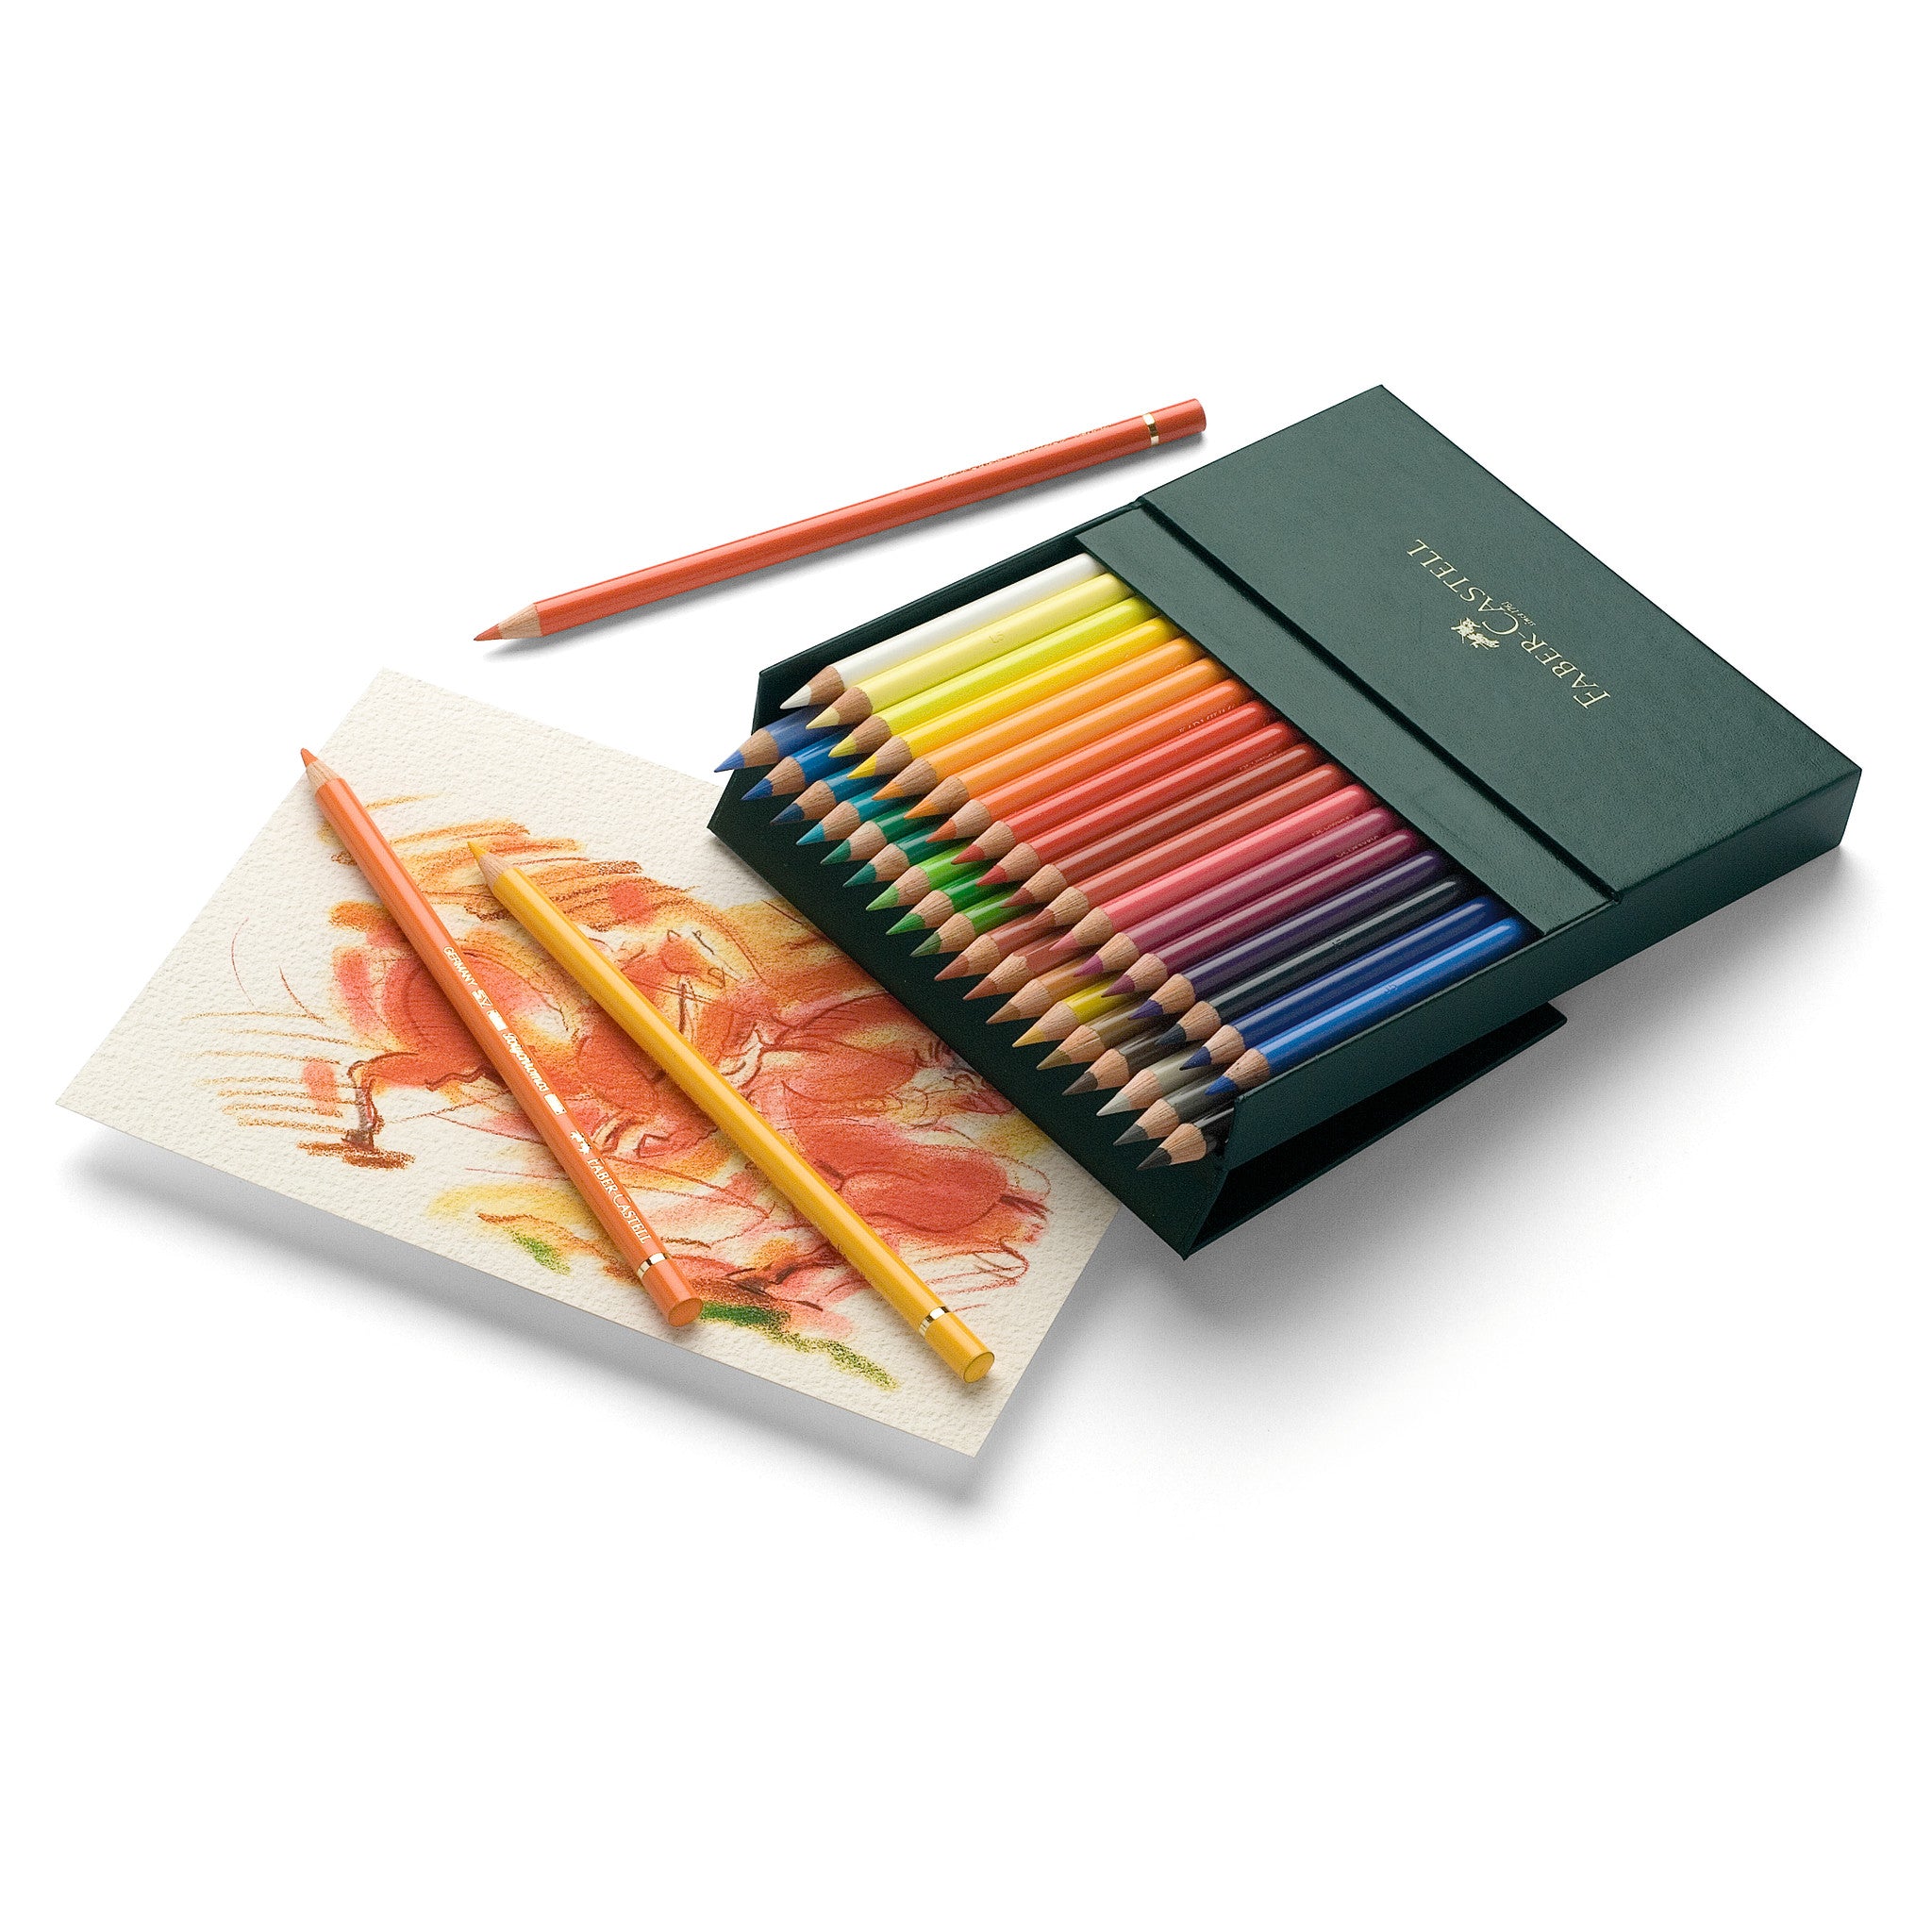  Faber-Castell Polychromos Artists' Color Pencils